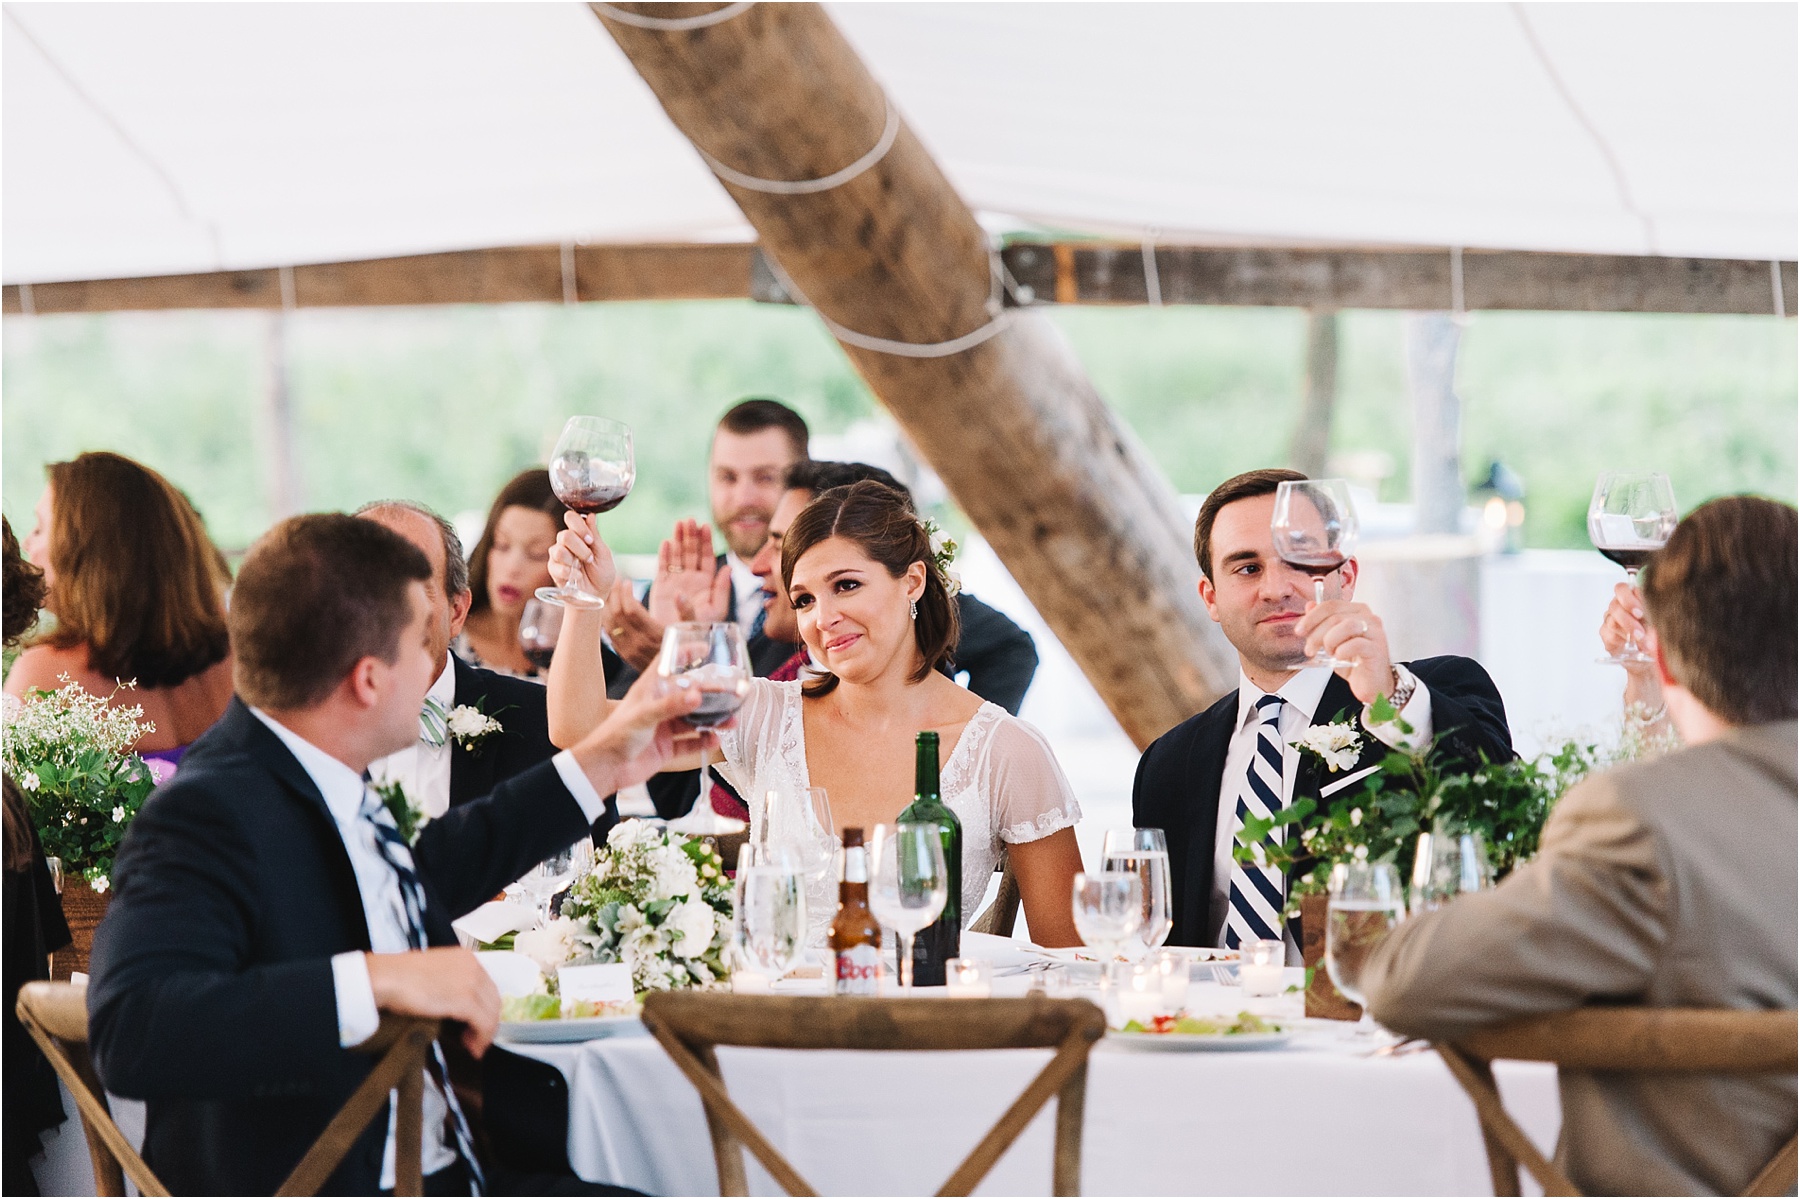 inspiring toasts at wedding